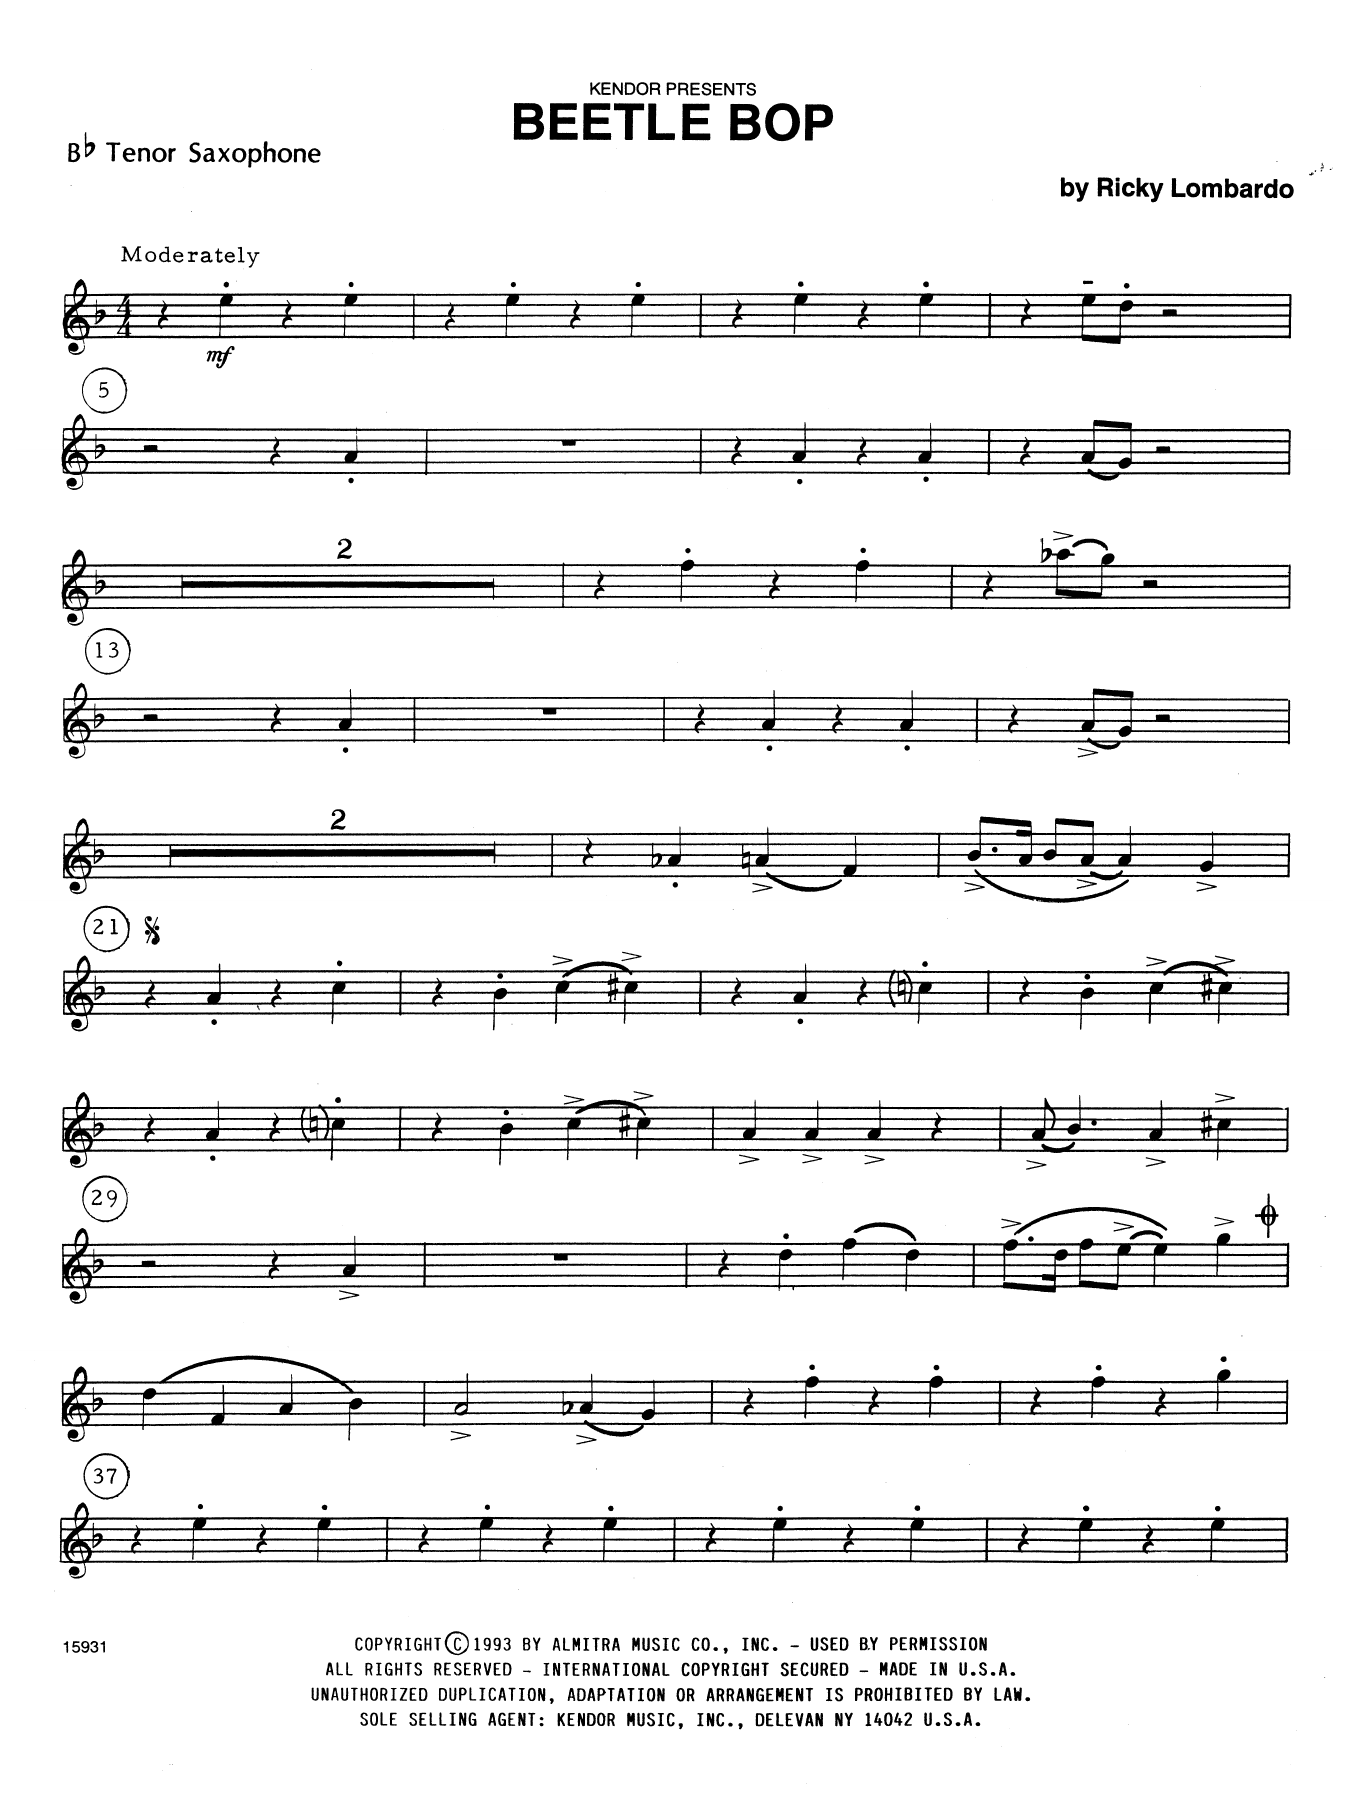 Download Ricky Lombardo Beetle Bop - Bb Tenor Saxophone Sheet Music